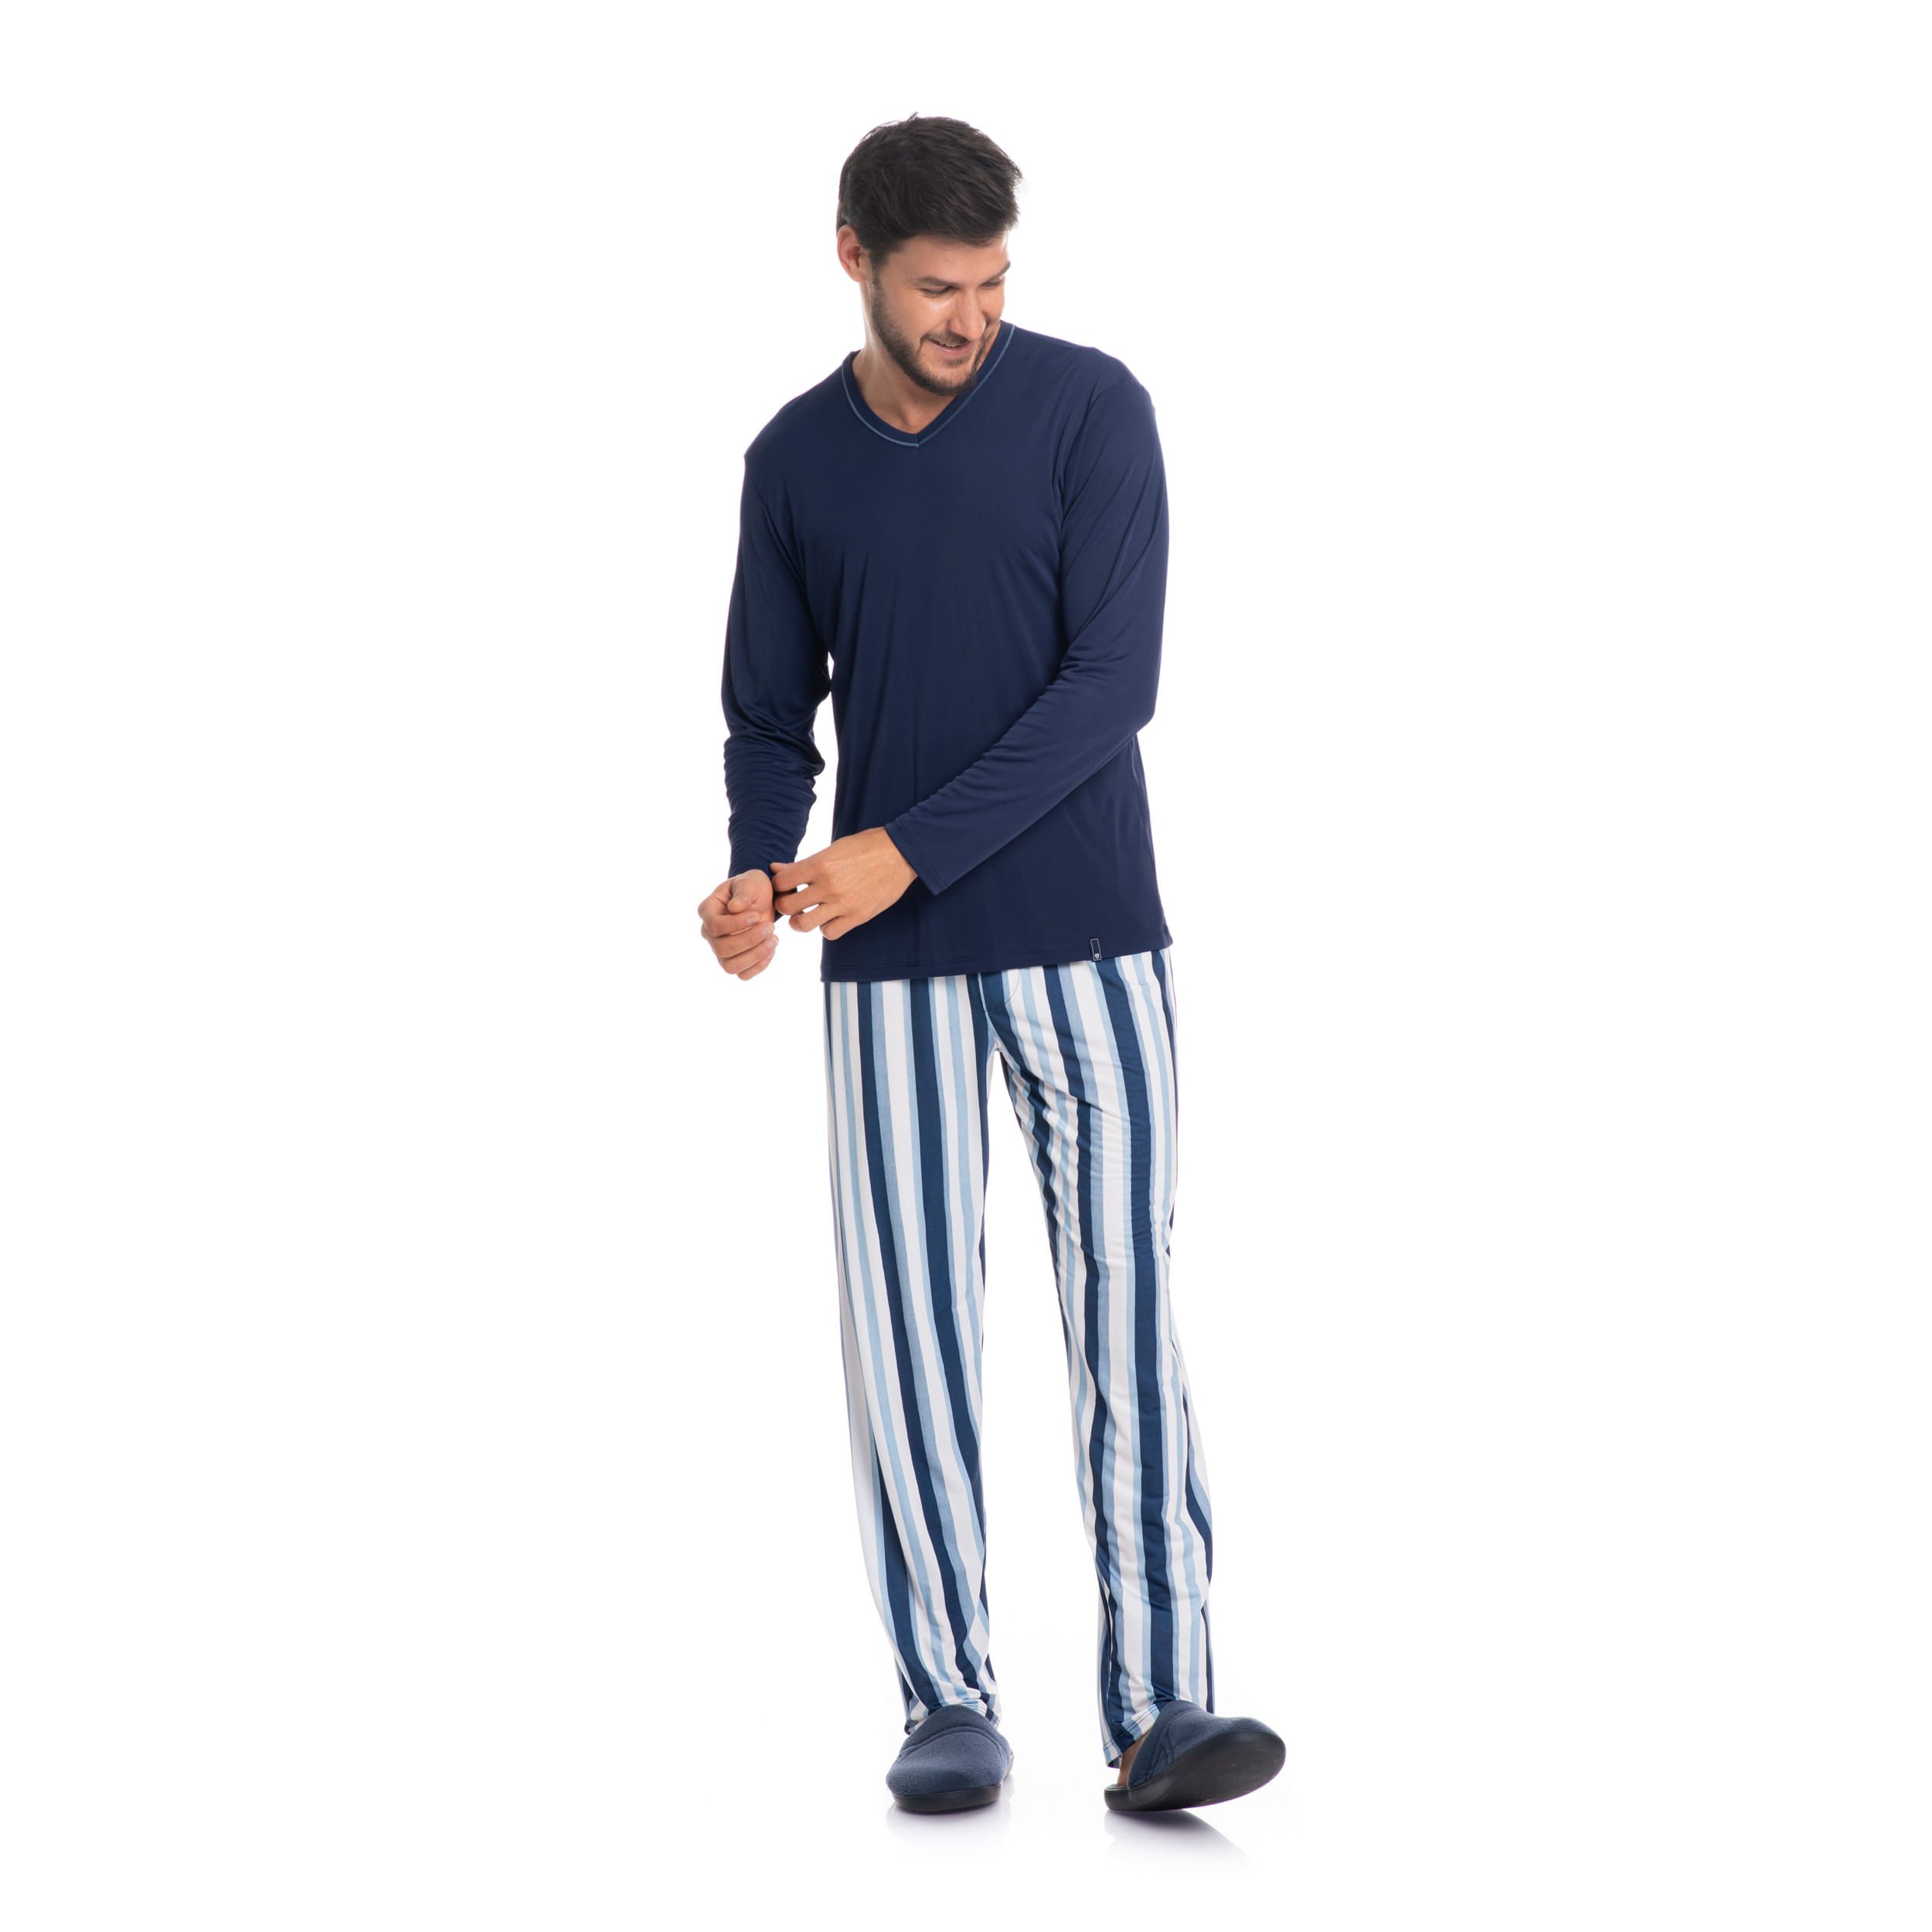 Pijama-Masculino-Longo-Estampado-Clovis-Tombini